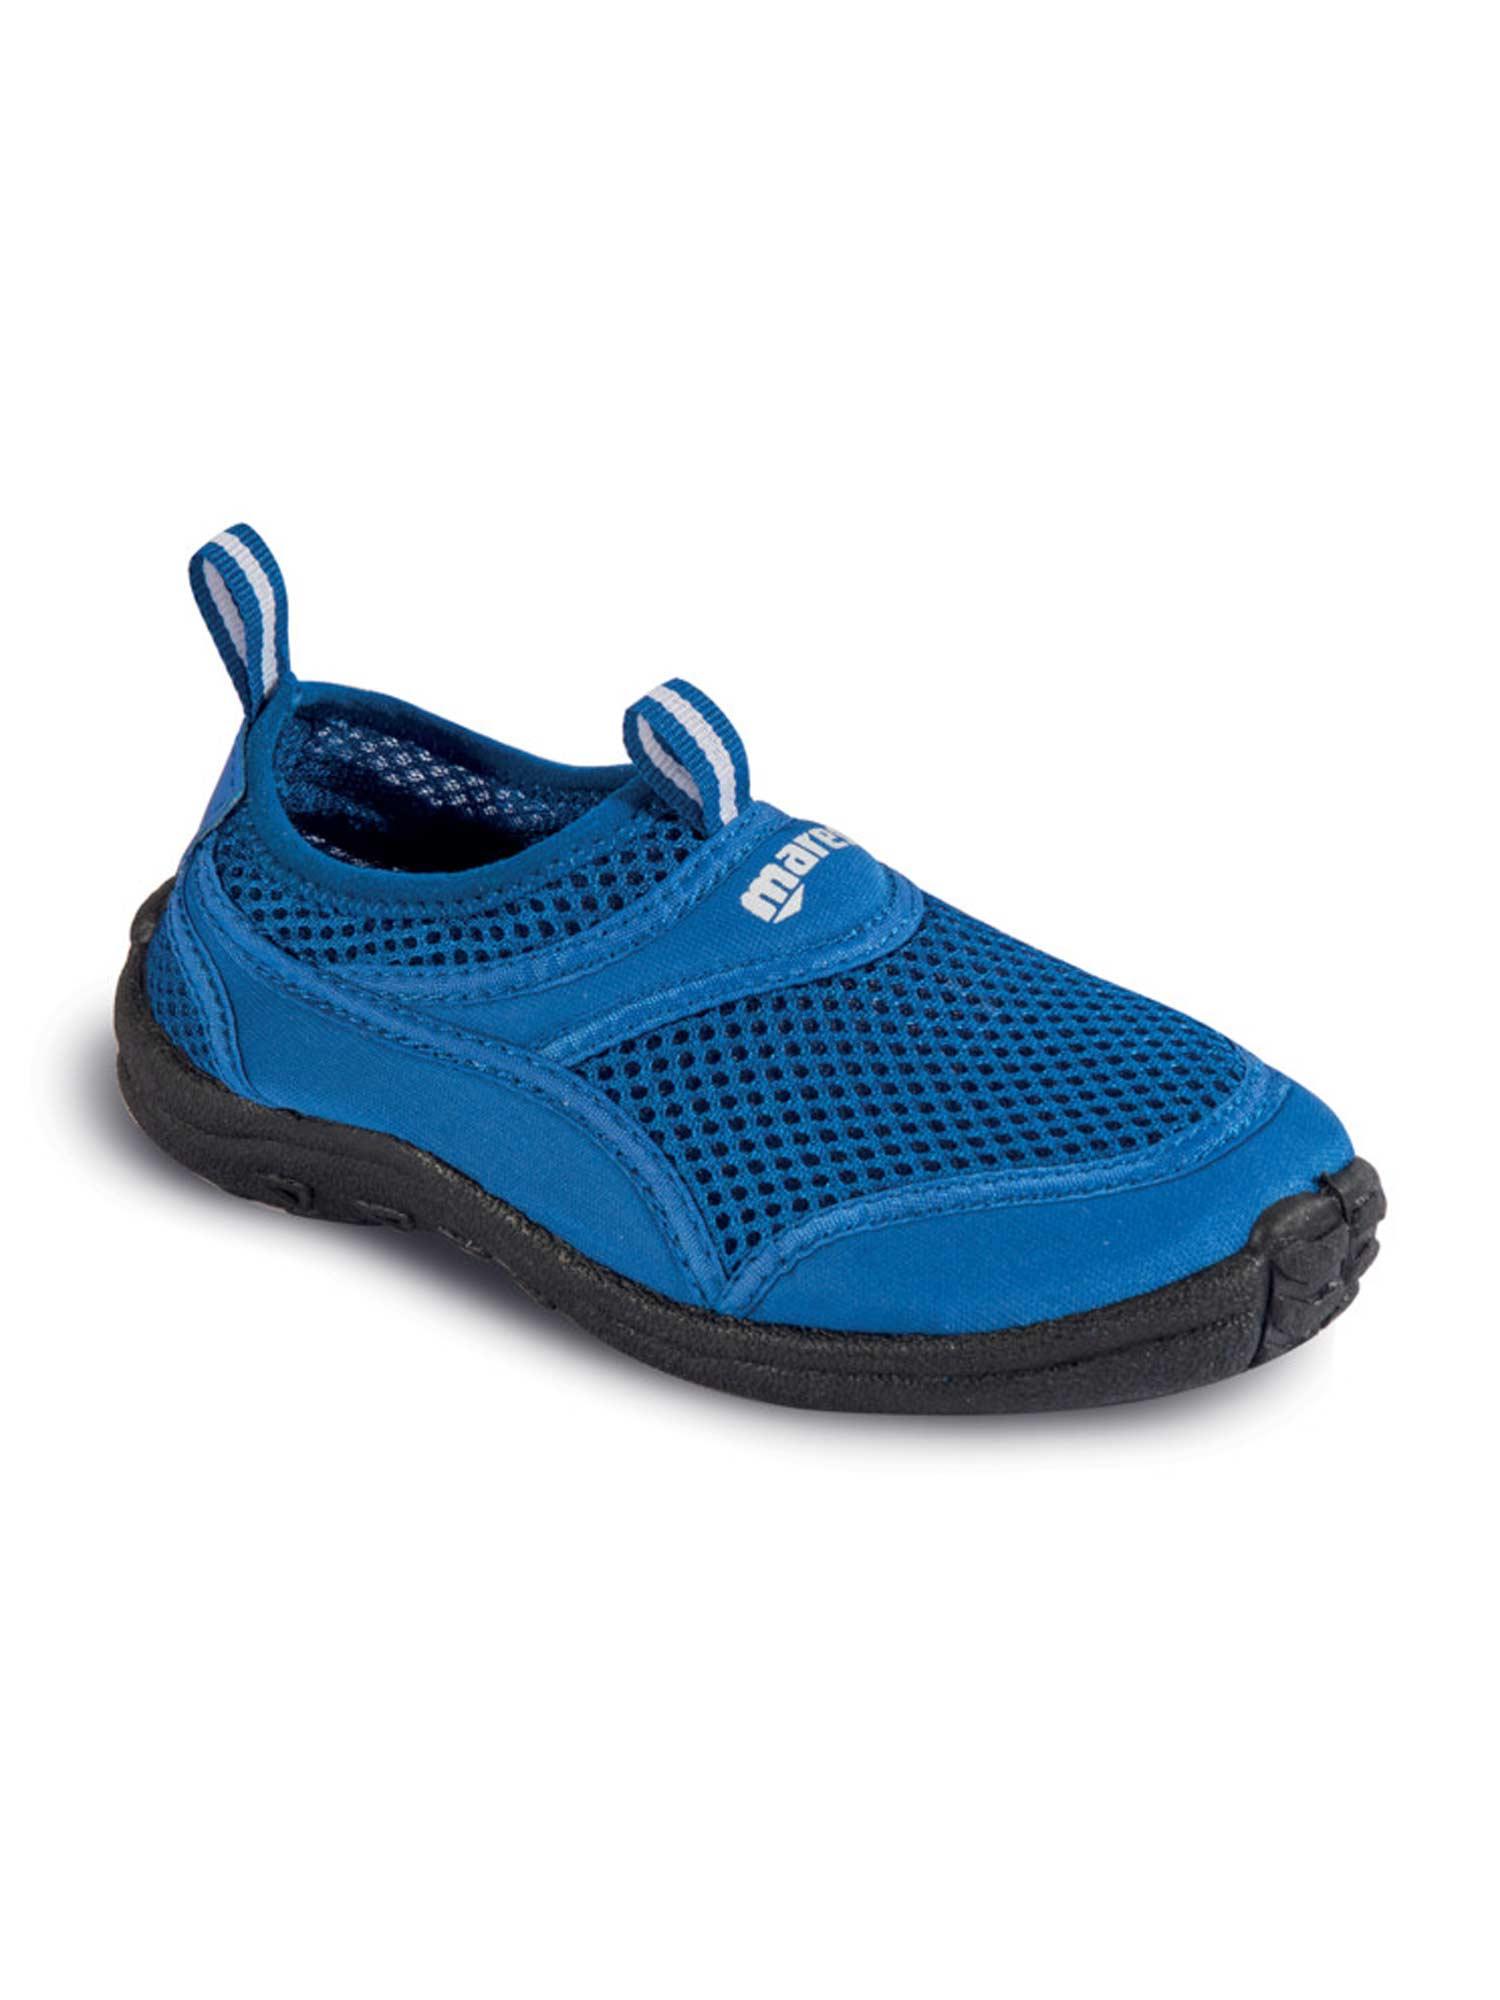 Selected image for MARES Dečija obuća za vodu AQUAWALK plava